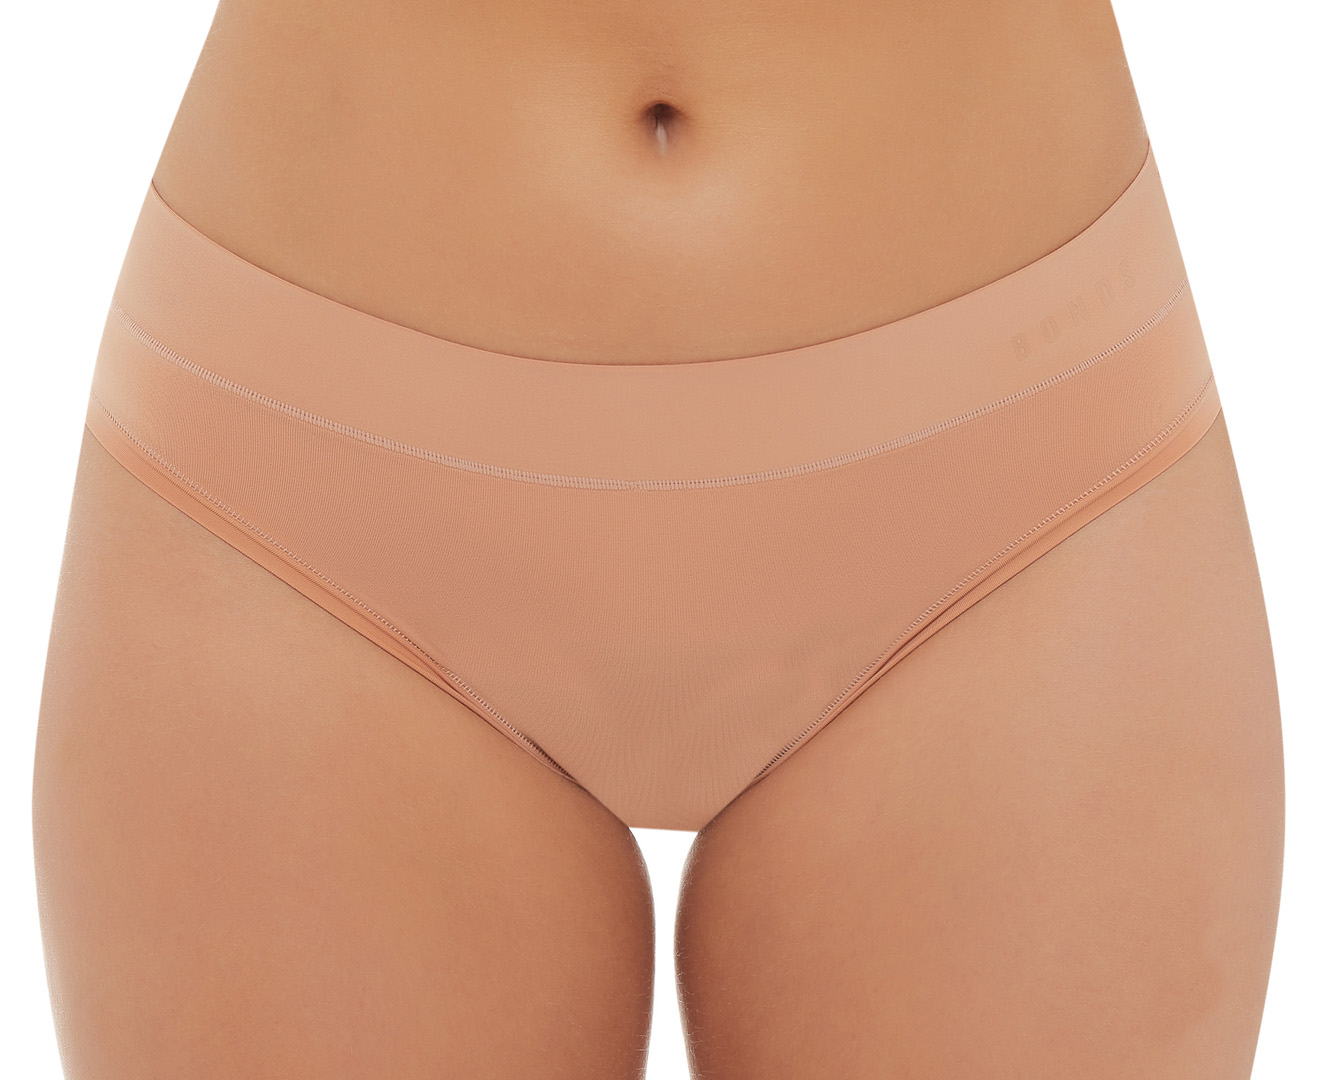 Buy Bonds Bloody Comfy Period Undies Bikini Size 8 online at